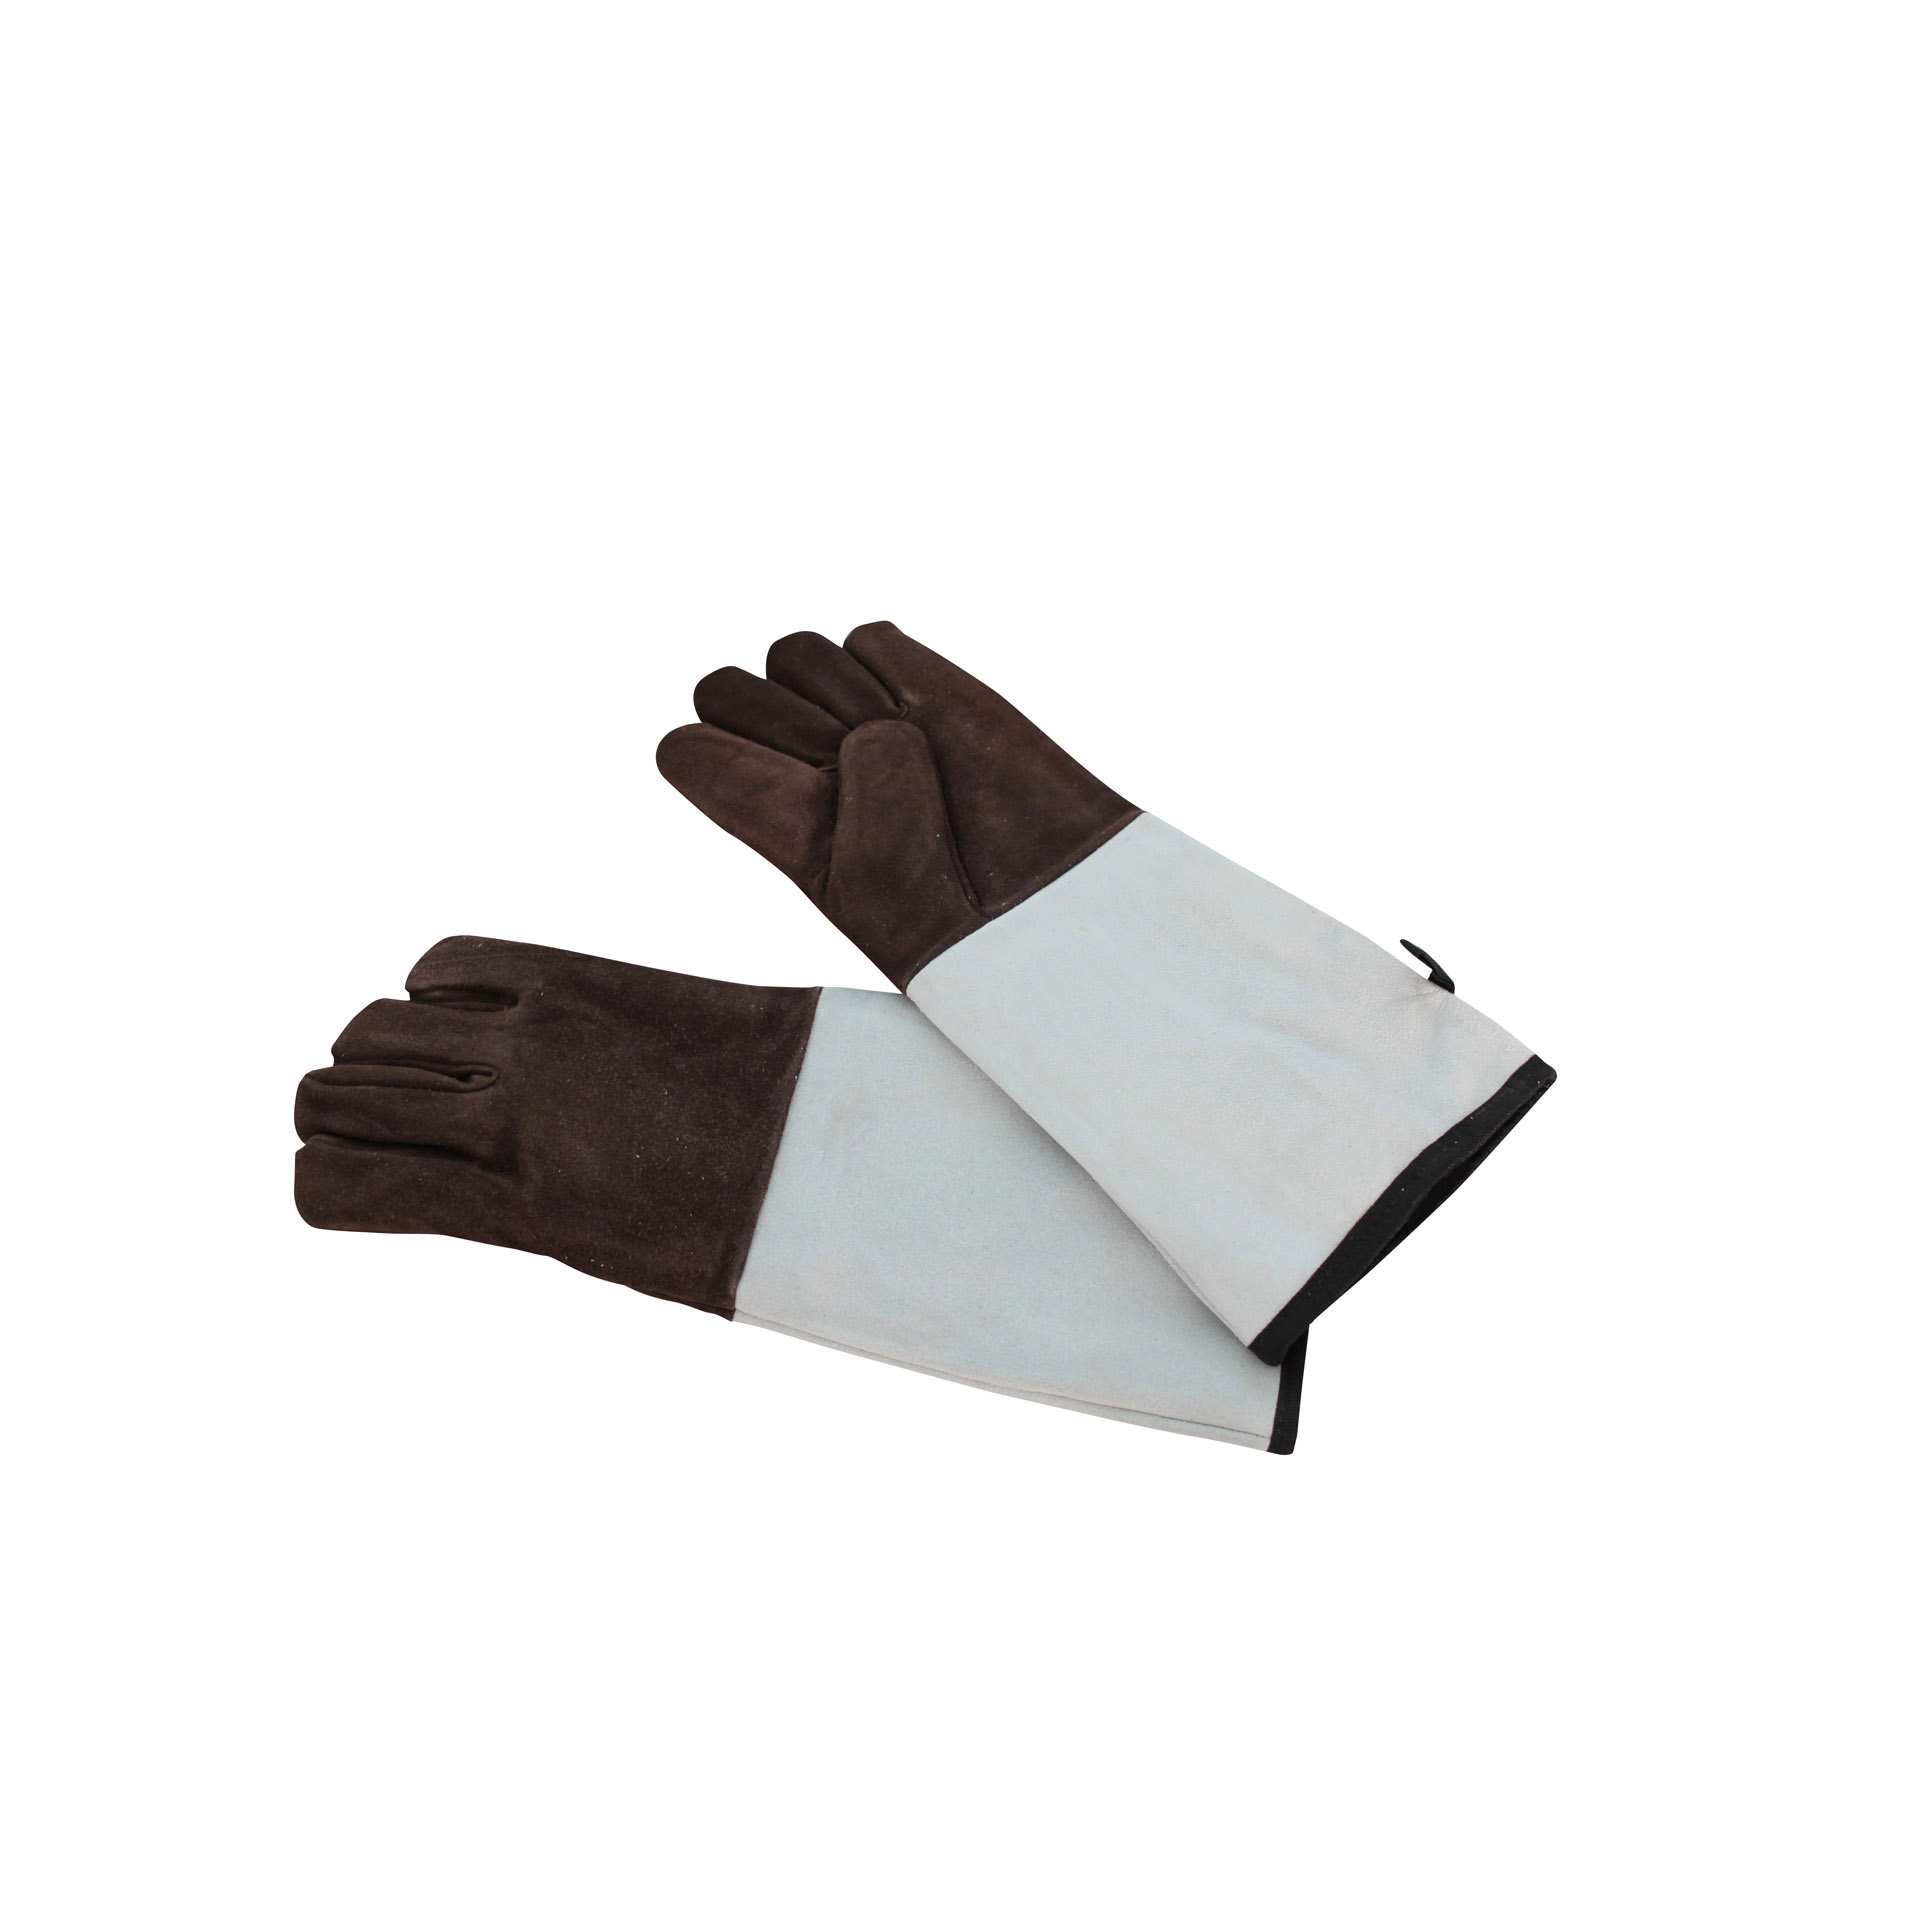 Backhandschuh - 5 Finger mit Stulpen - braun / grau - Abm. 45,0 x 16,0 x 5,0 cm - Leder - 310023-C